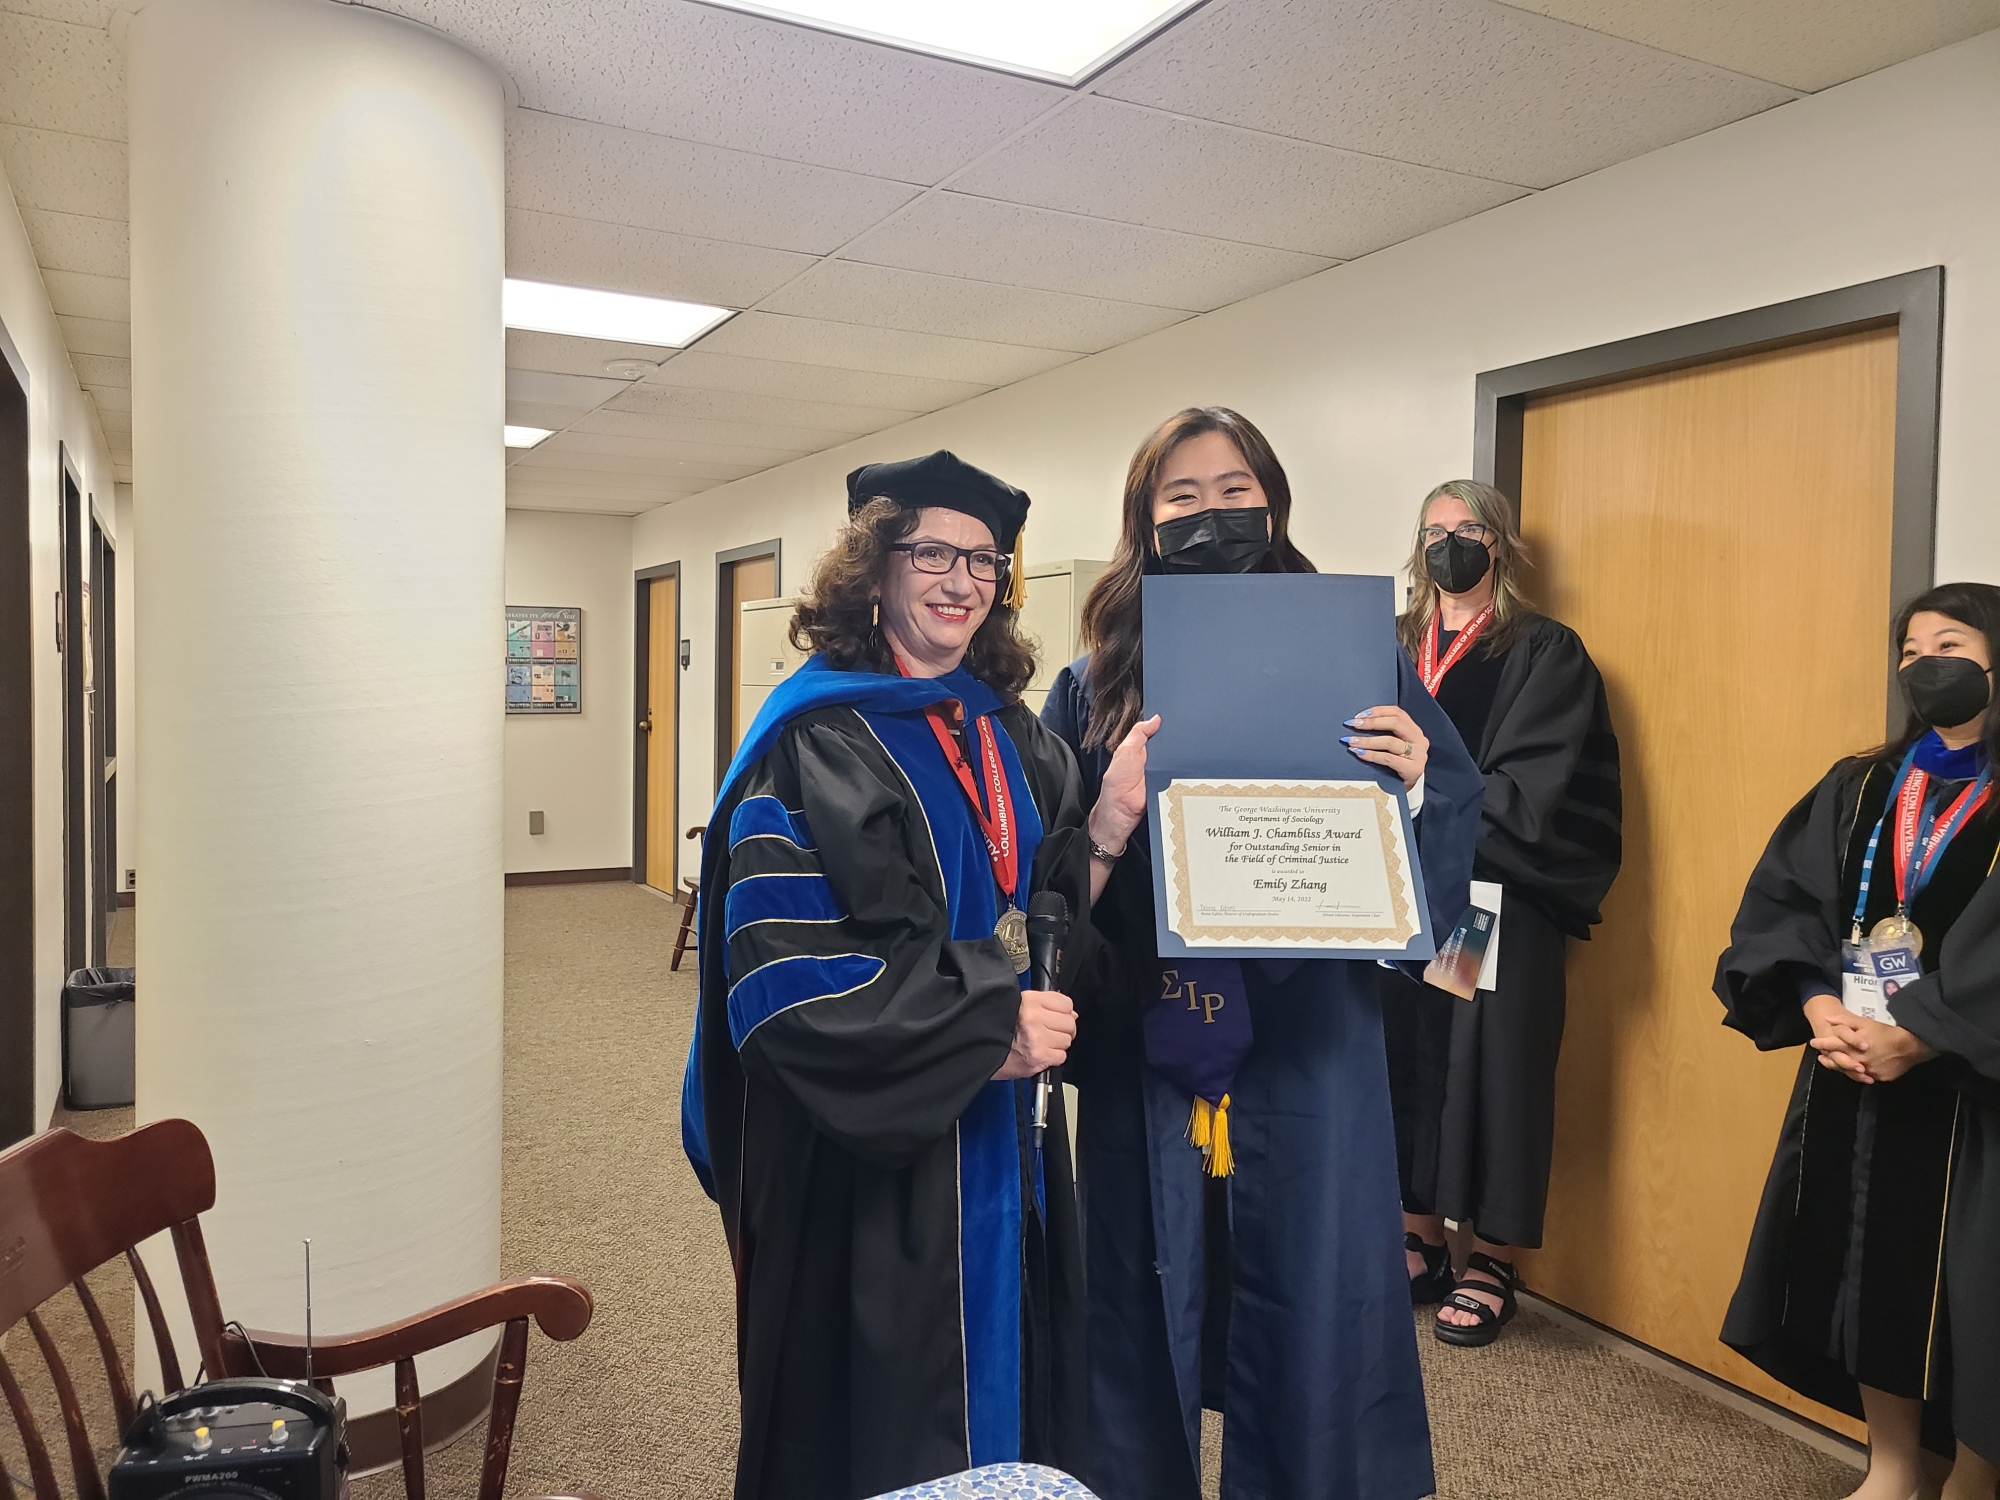 Emily Zhang with Prof. Fran Buntman